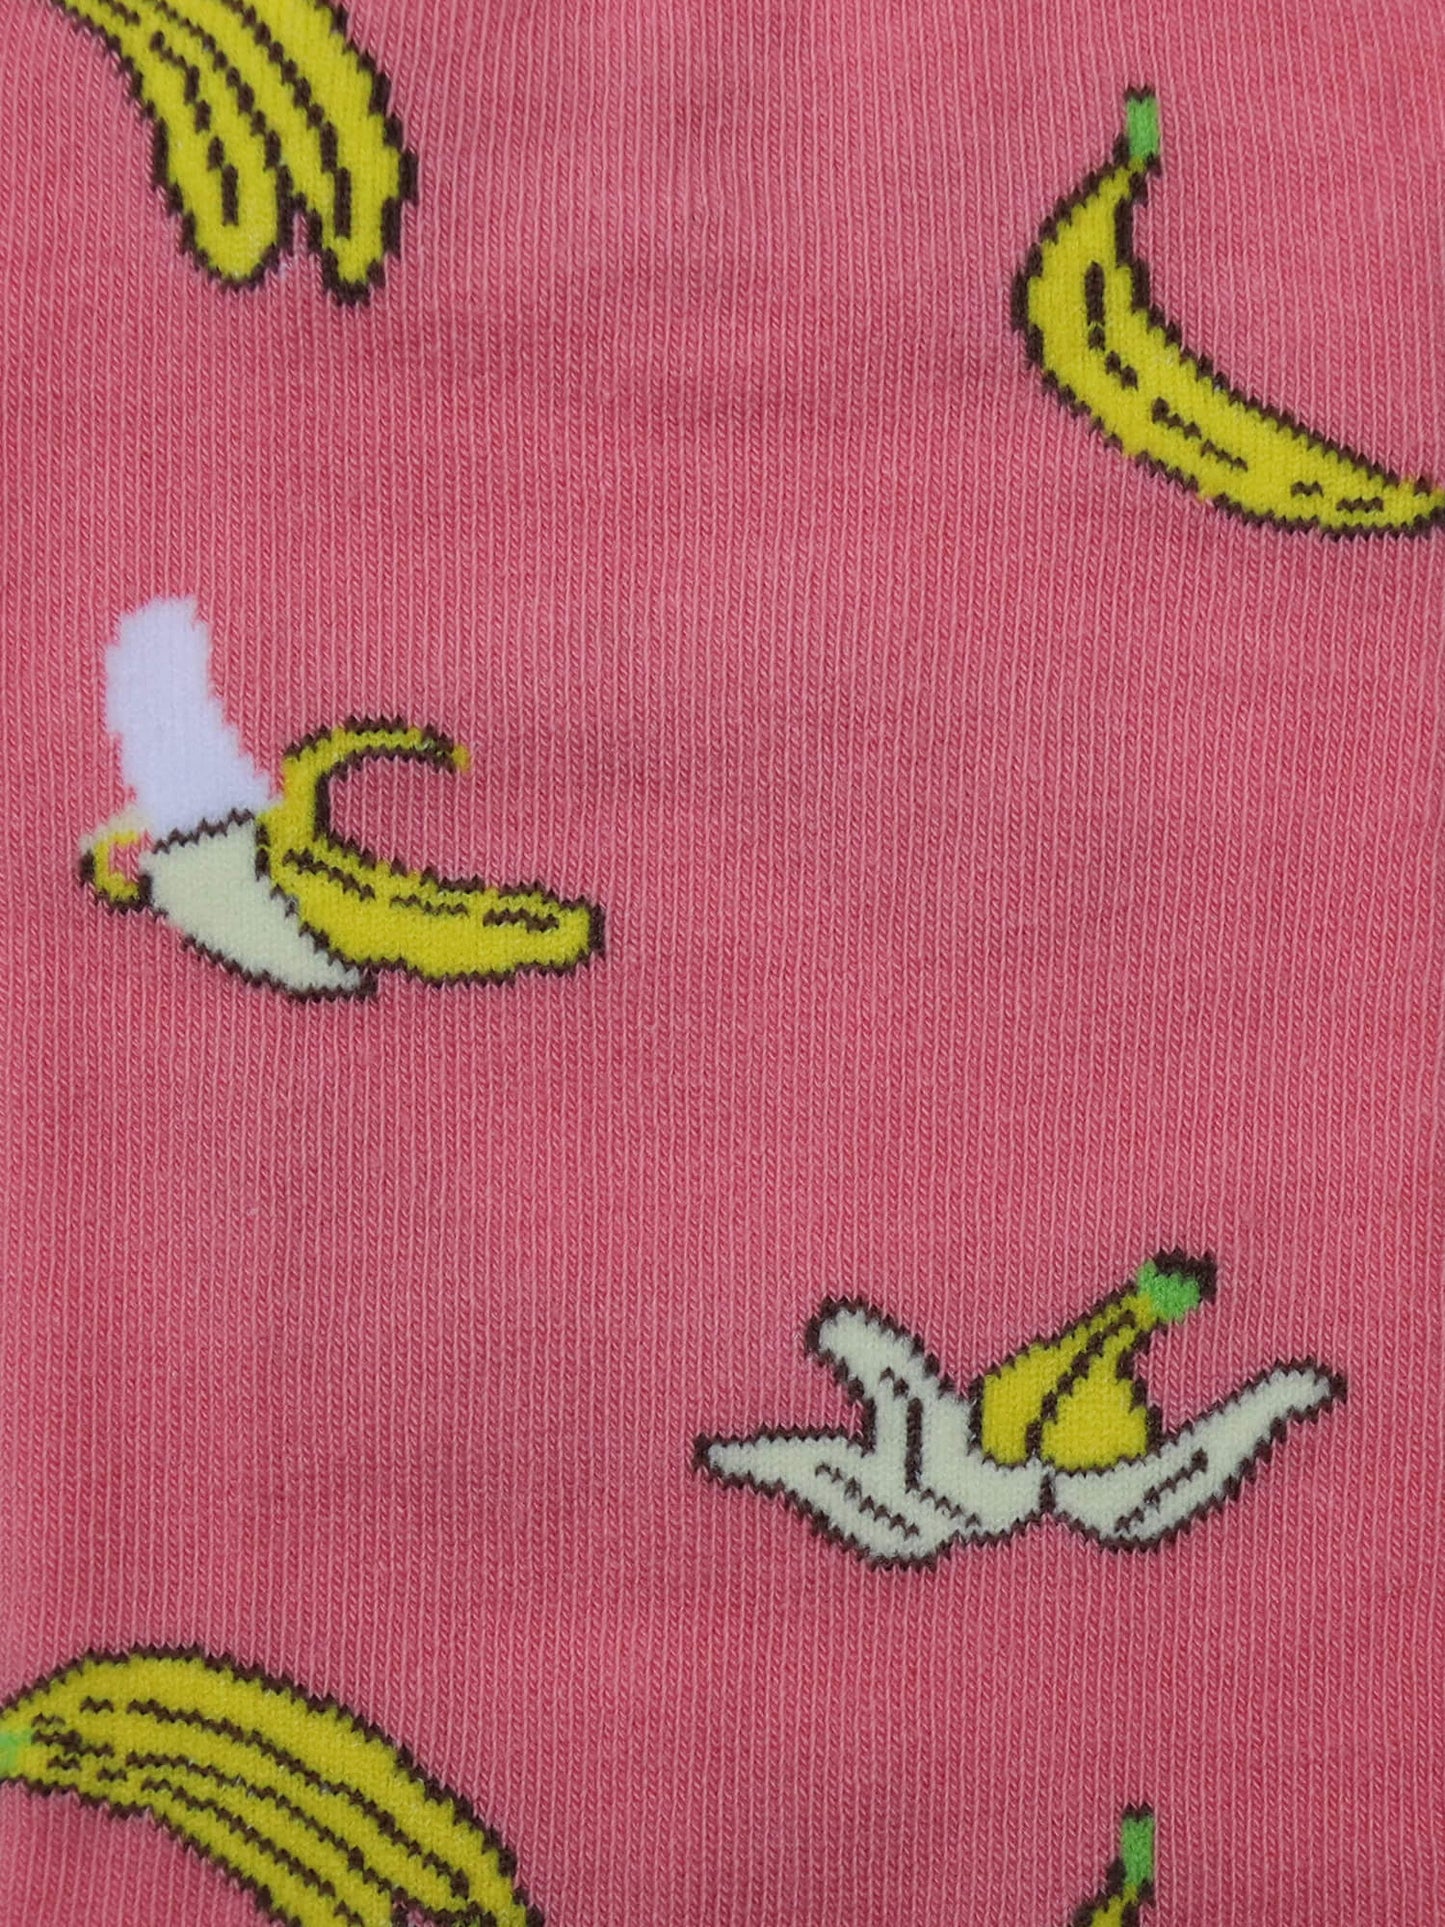 Pink Banana by Bermies